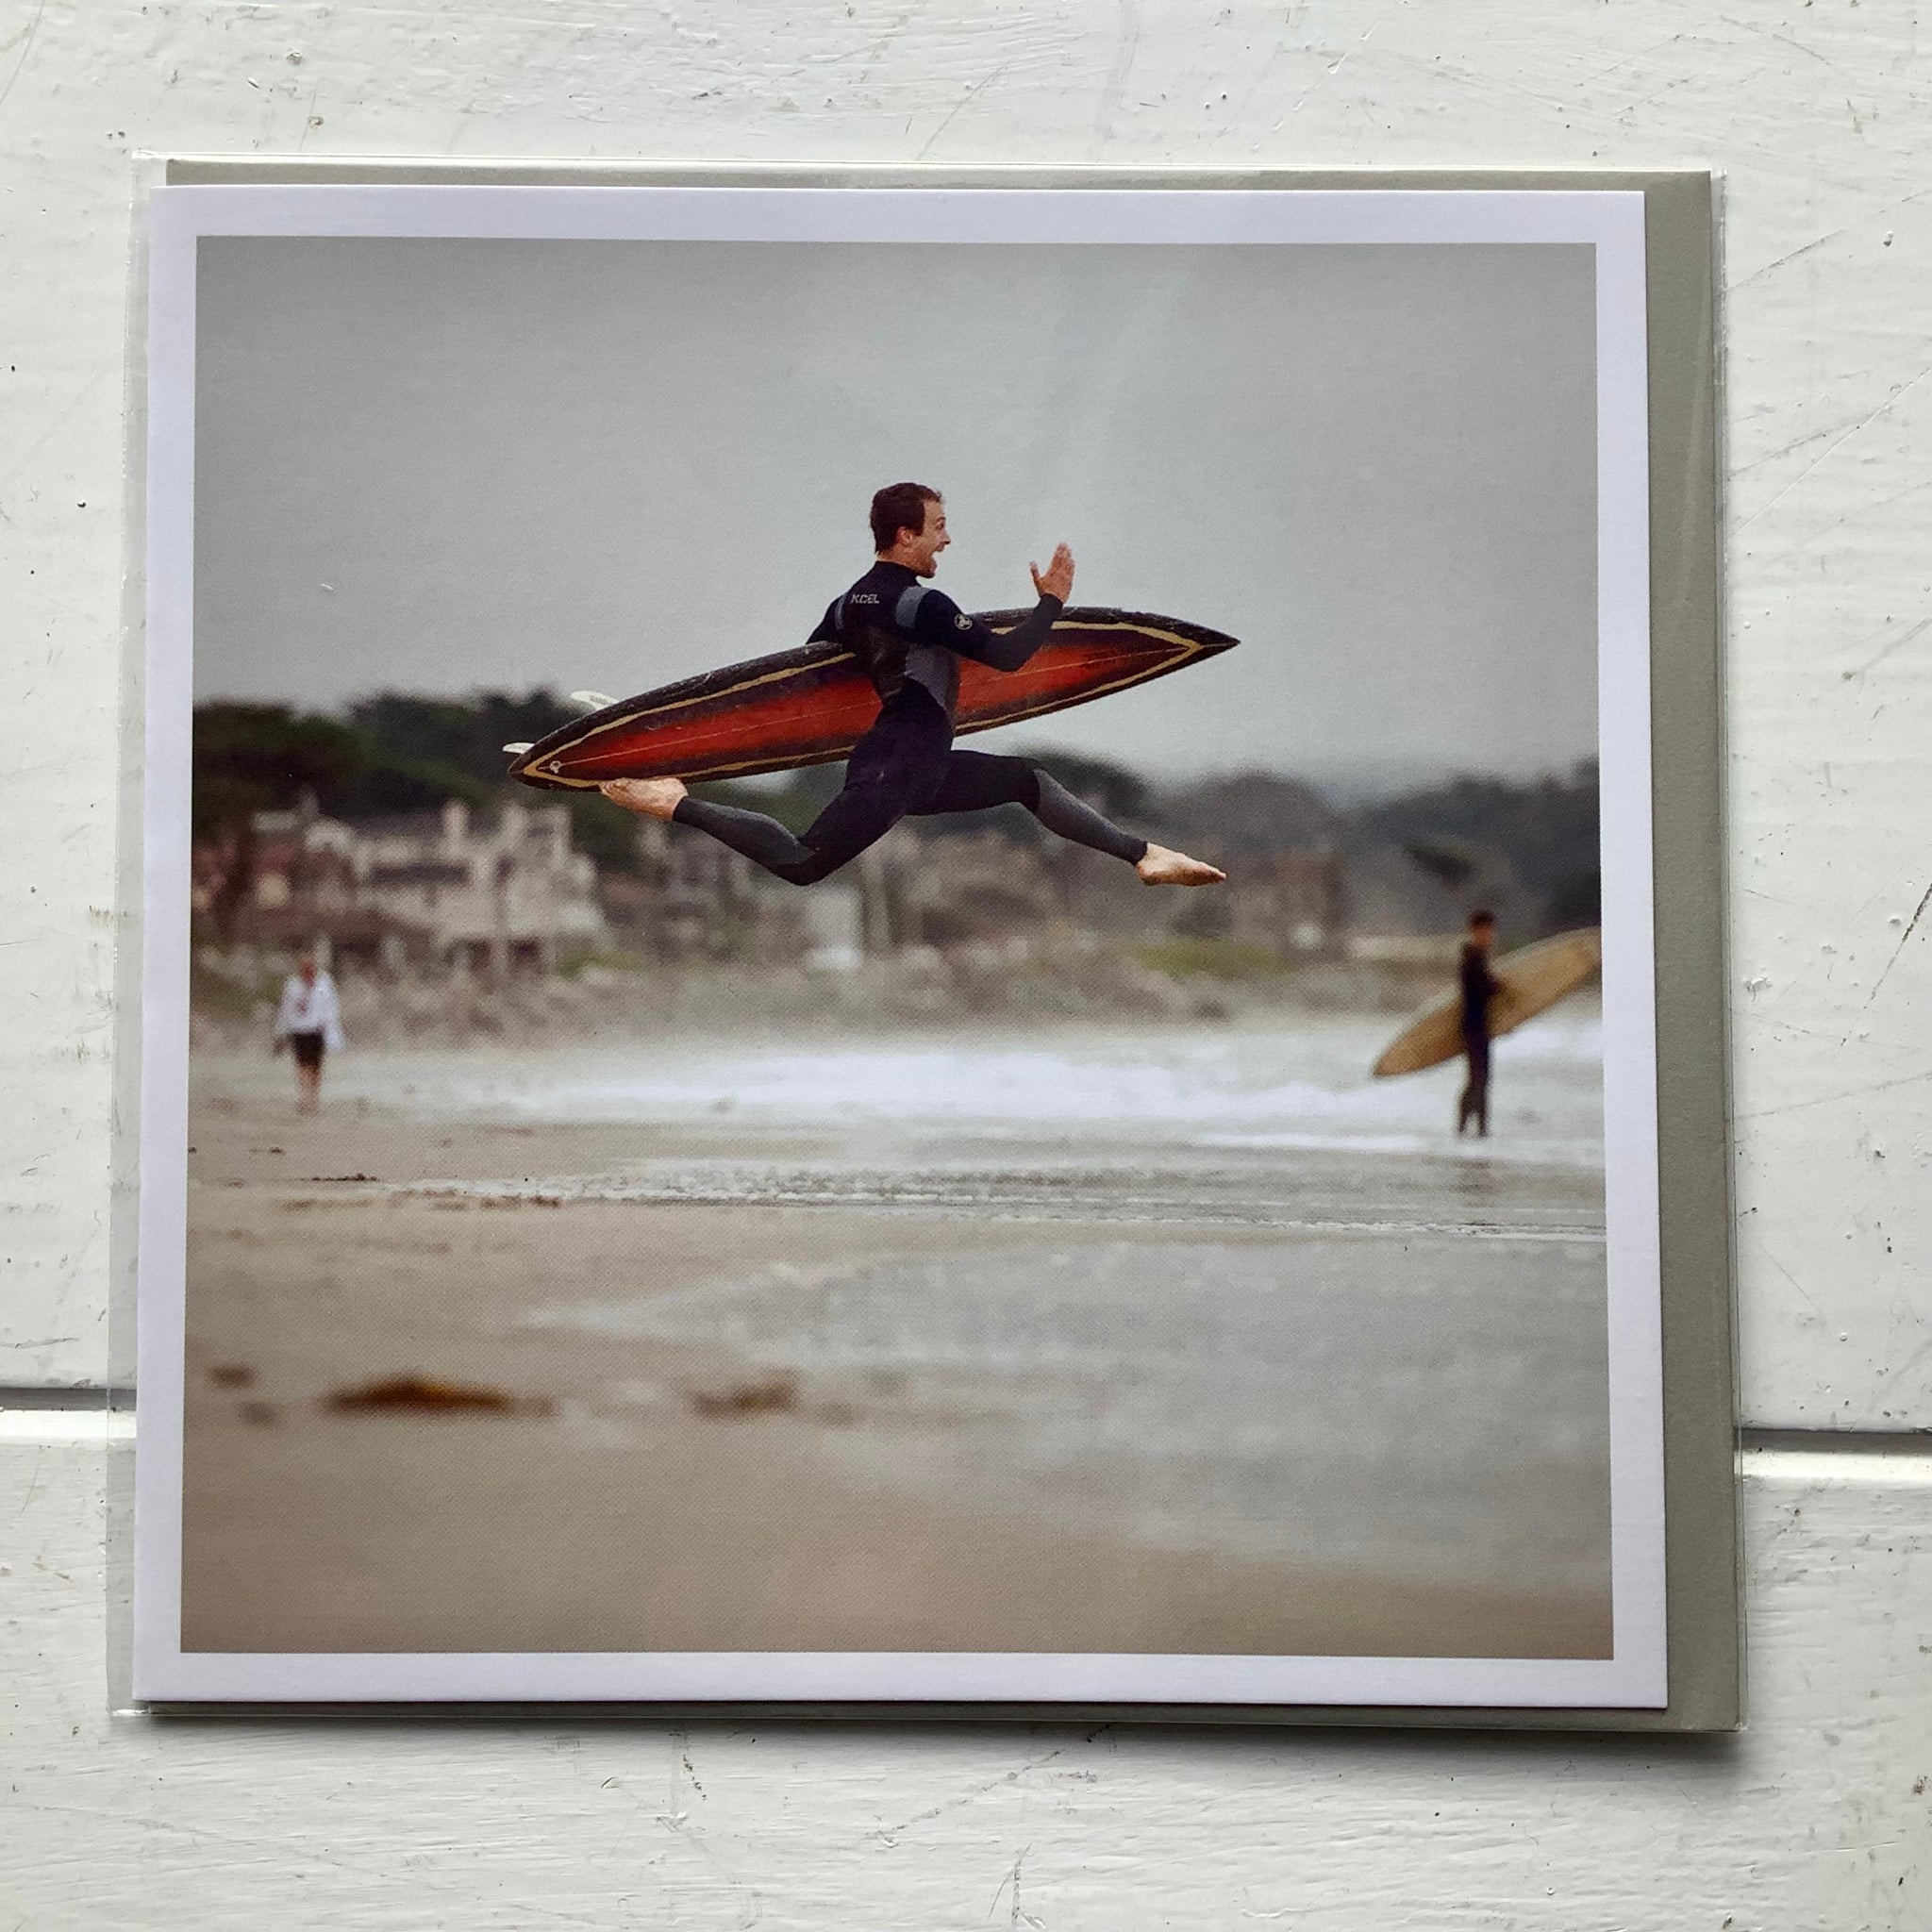 Surfer Leap Card By U Studio